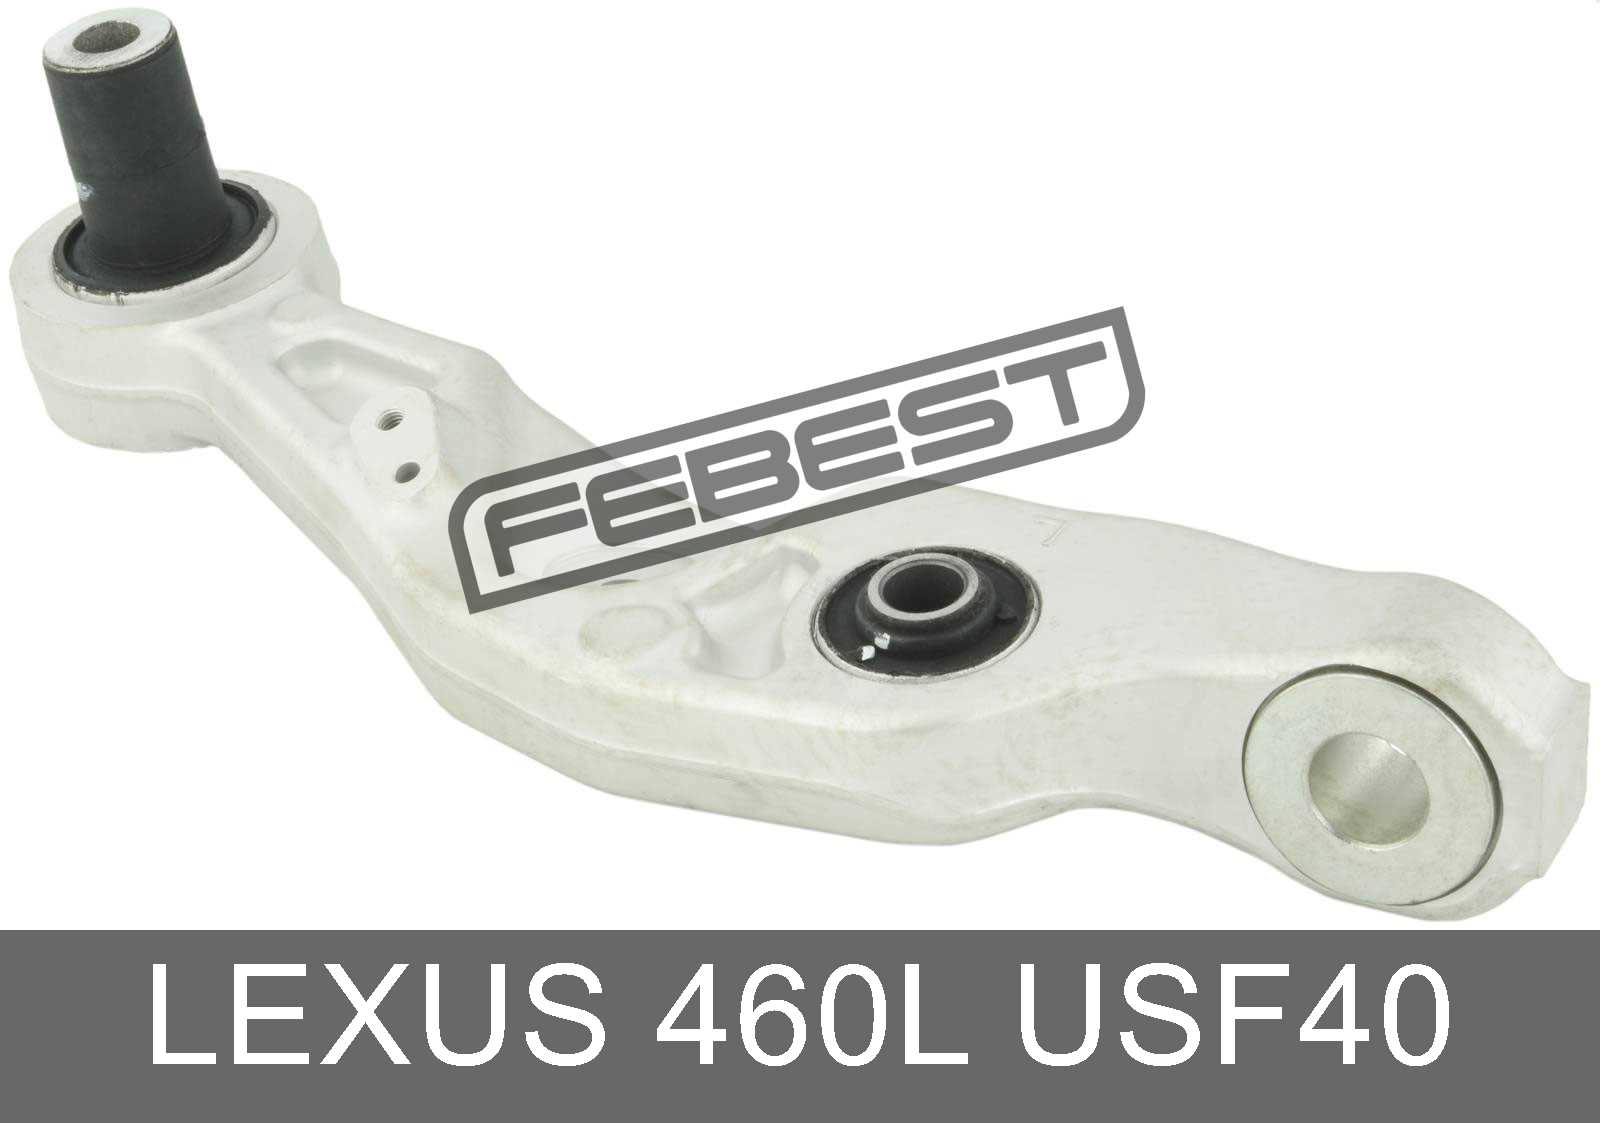 LEXUS 0124-USF40F6_NJT Product Photo